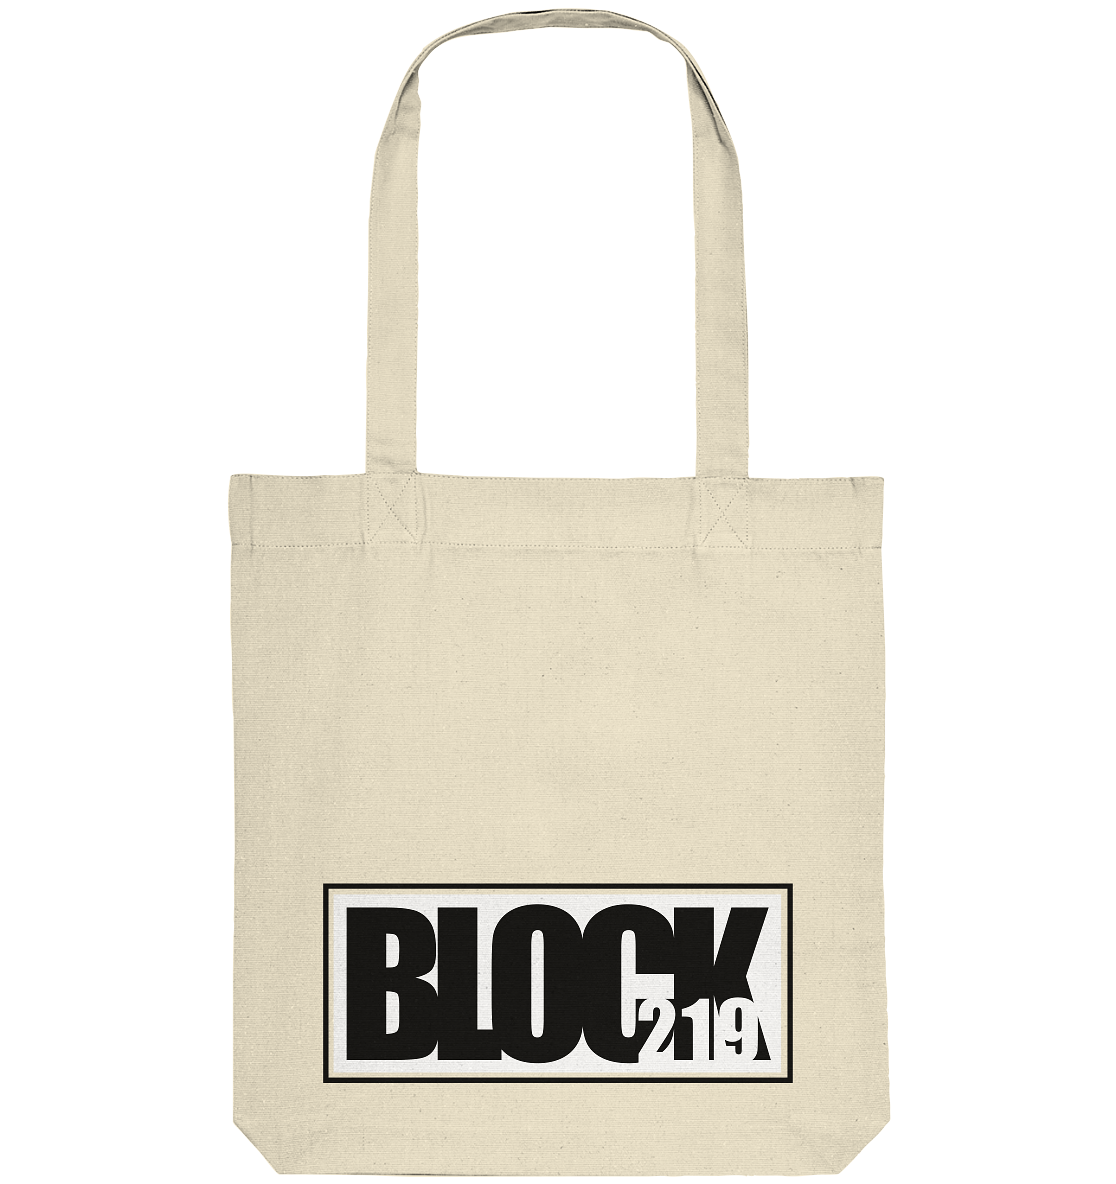 N.O.S.W. BLOCK Tote-Bag "BLOCK219" Organic Baumwolltasche natural